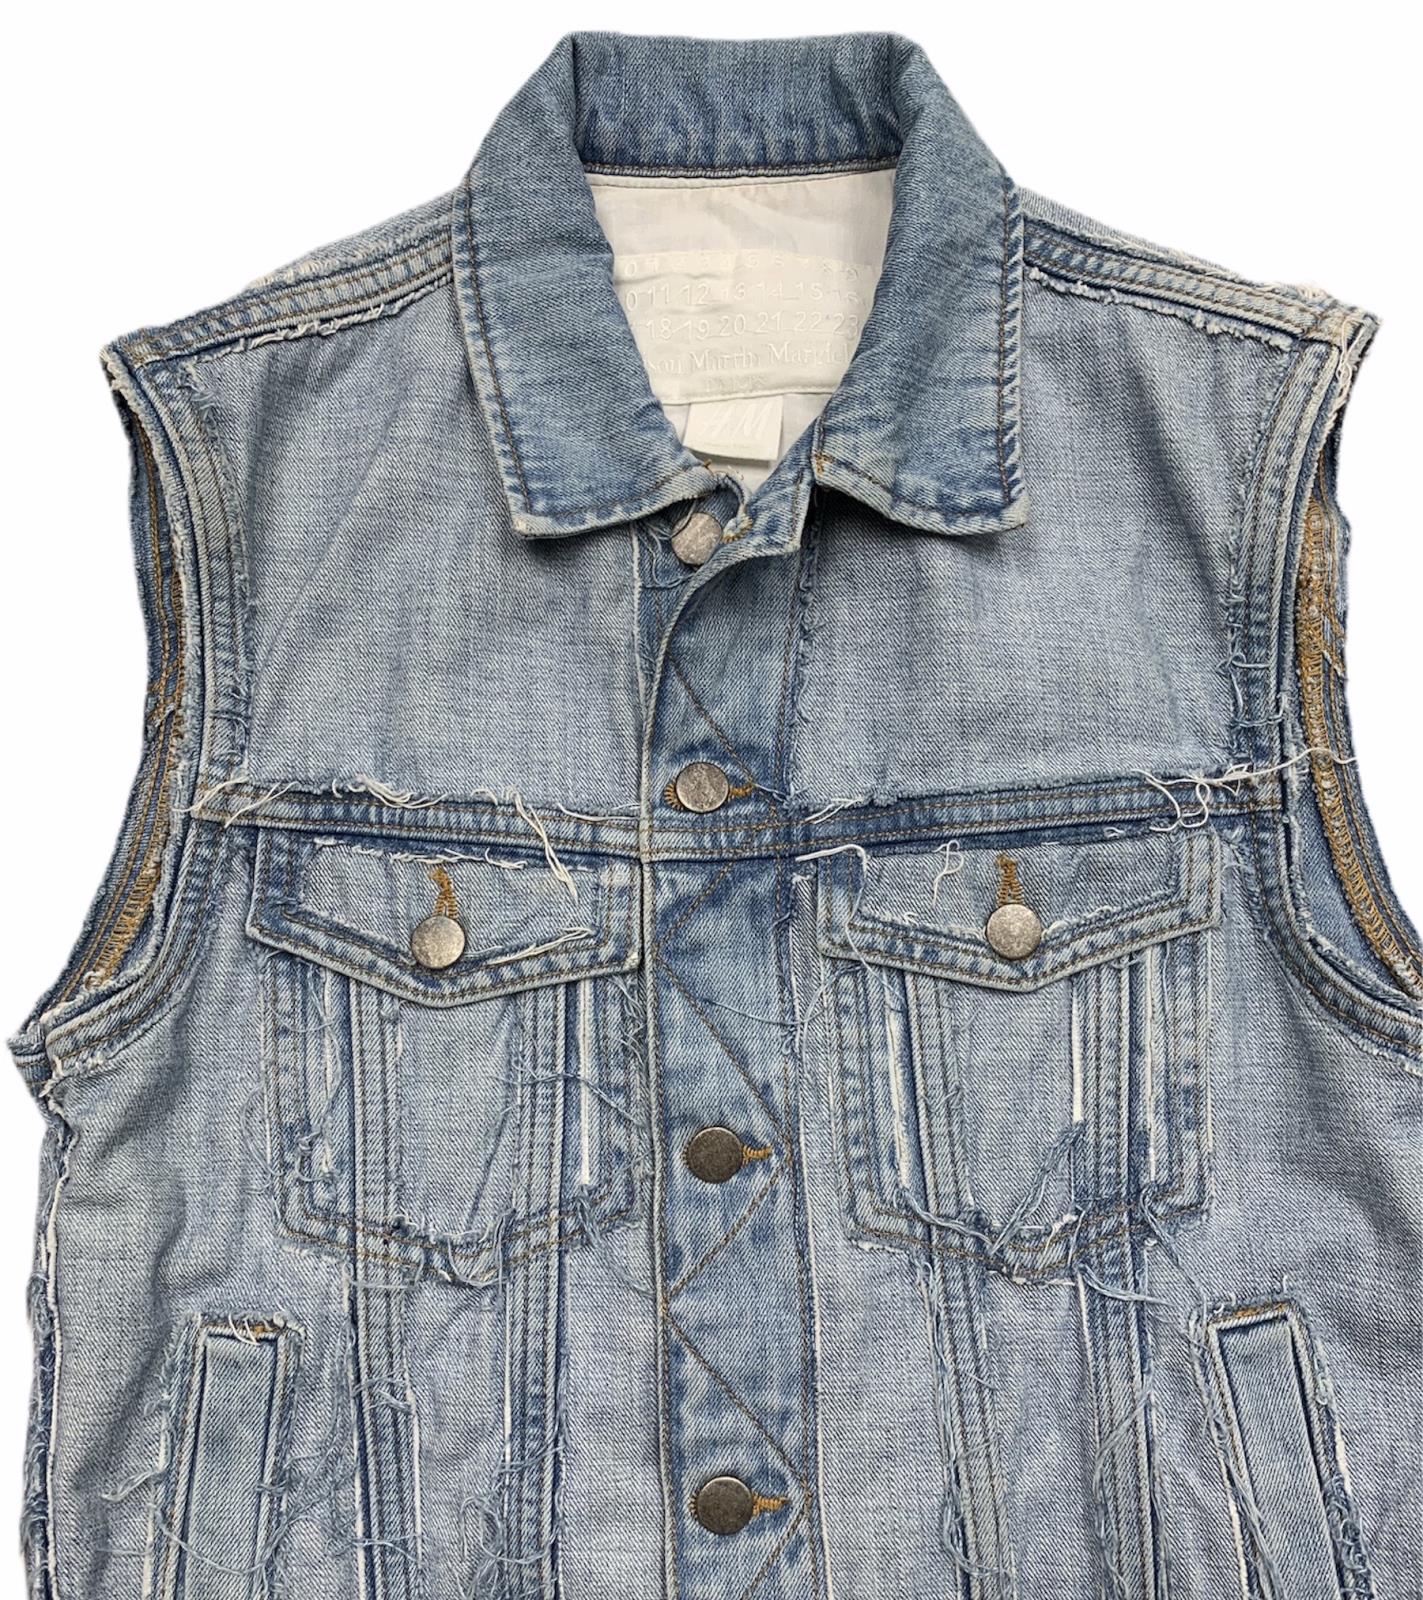 H&M Maison Martin Margiela Reversed Denim Jacket Vest Size Small | eBay